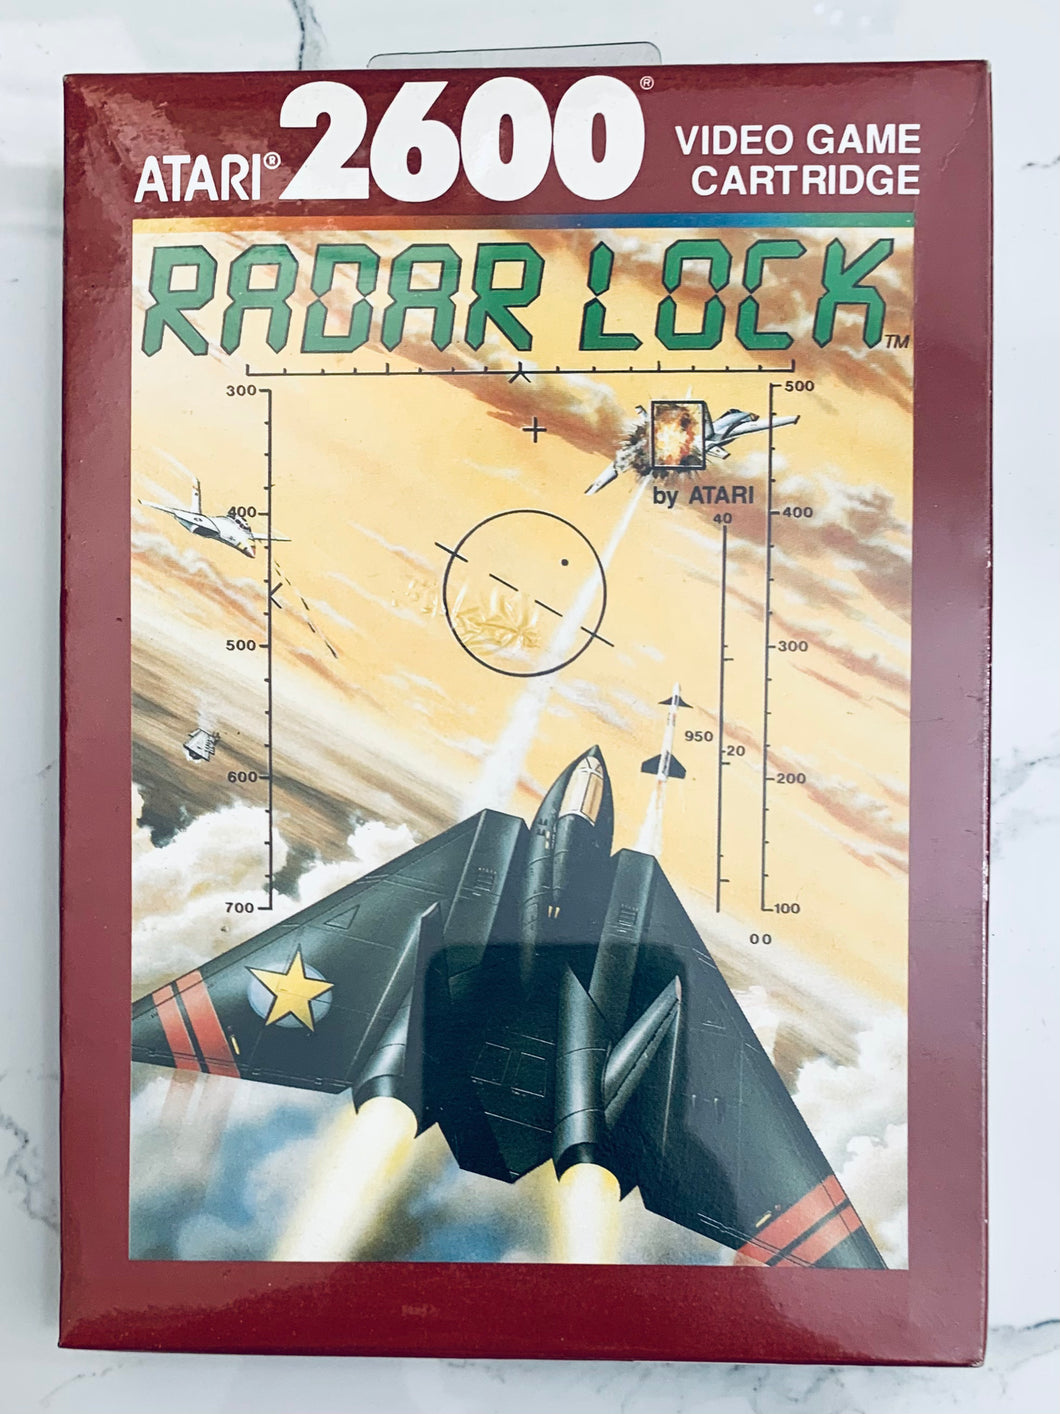 Radar Lock - Atari VCS 2600 - NTSC - Brand New